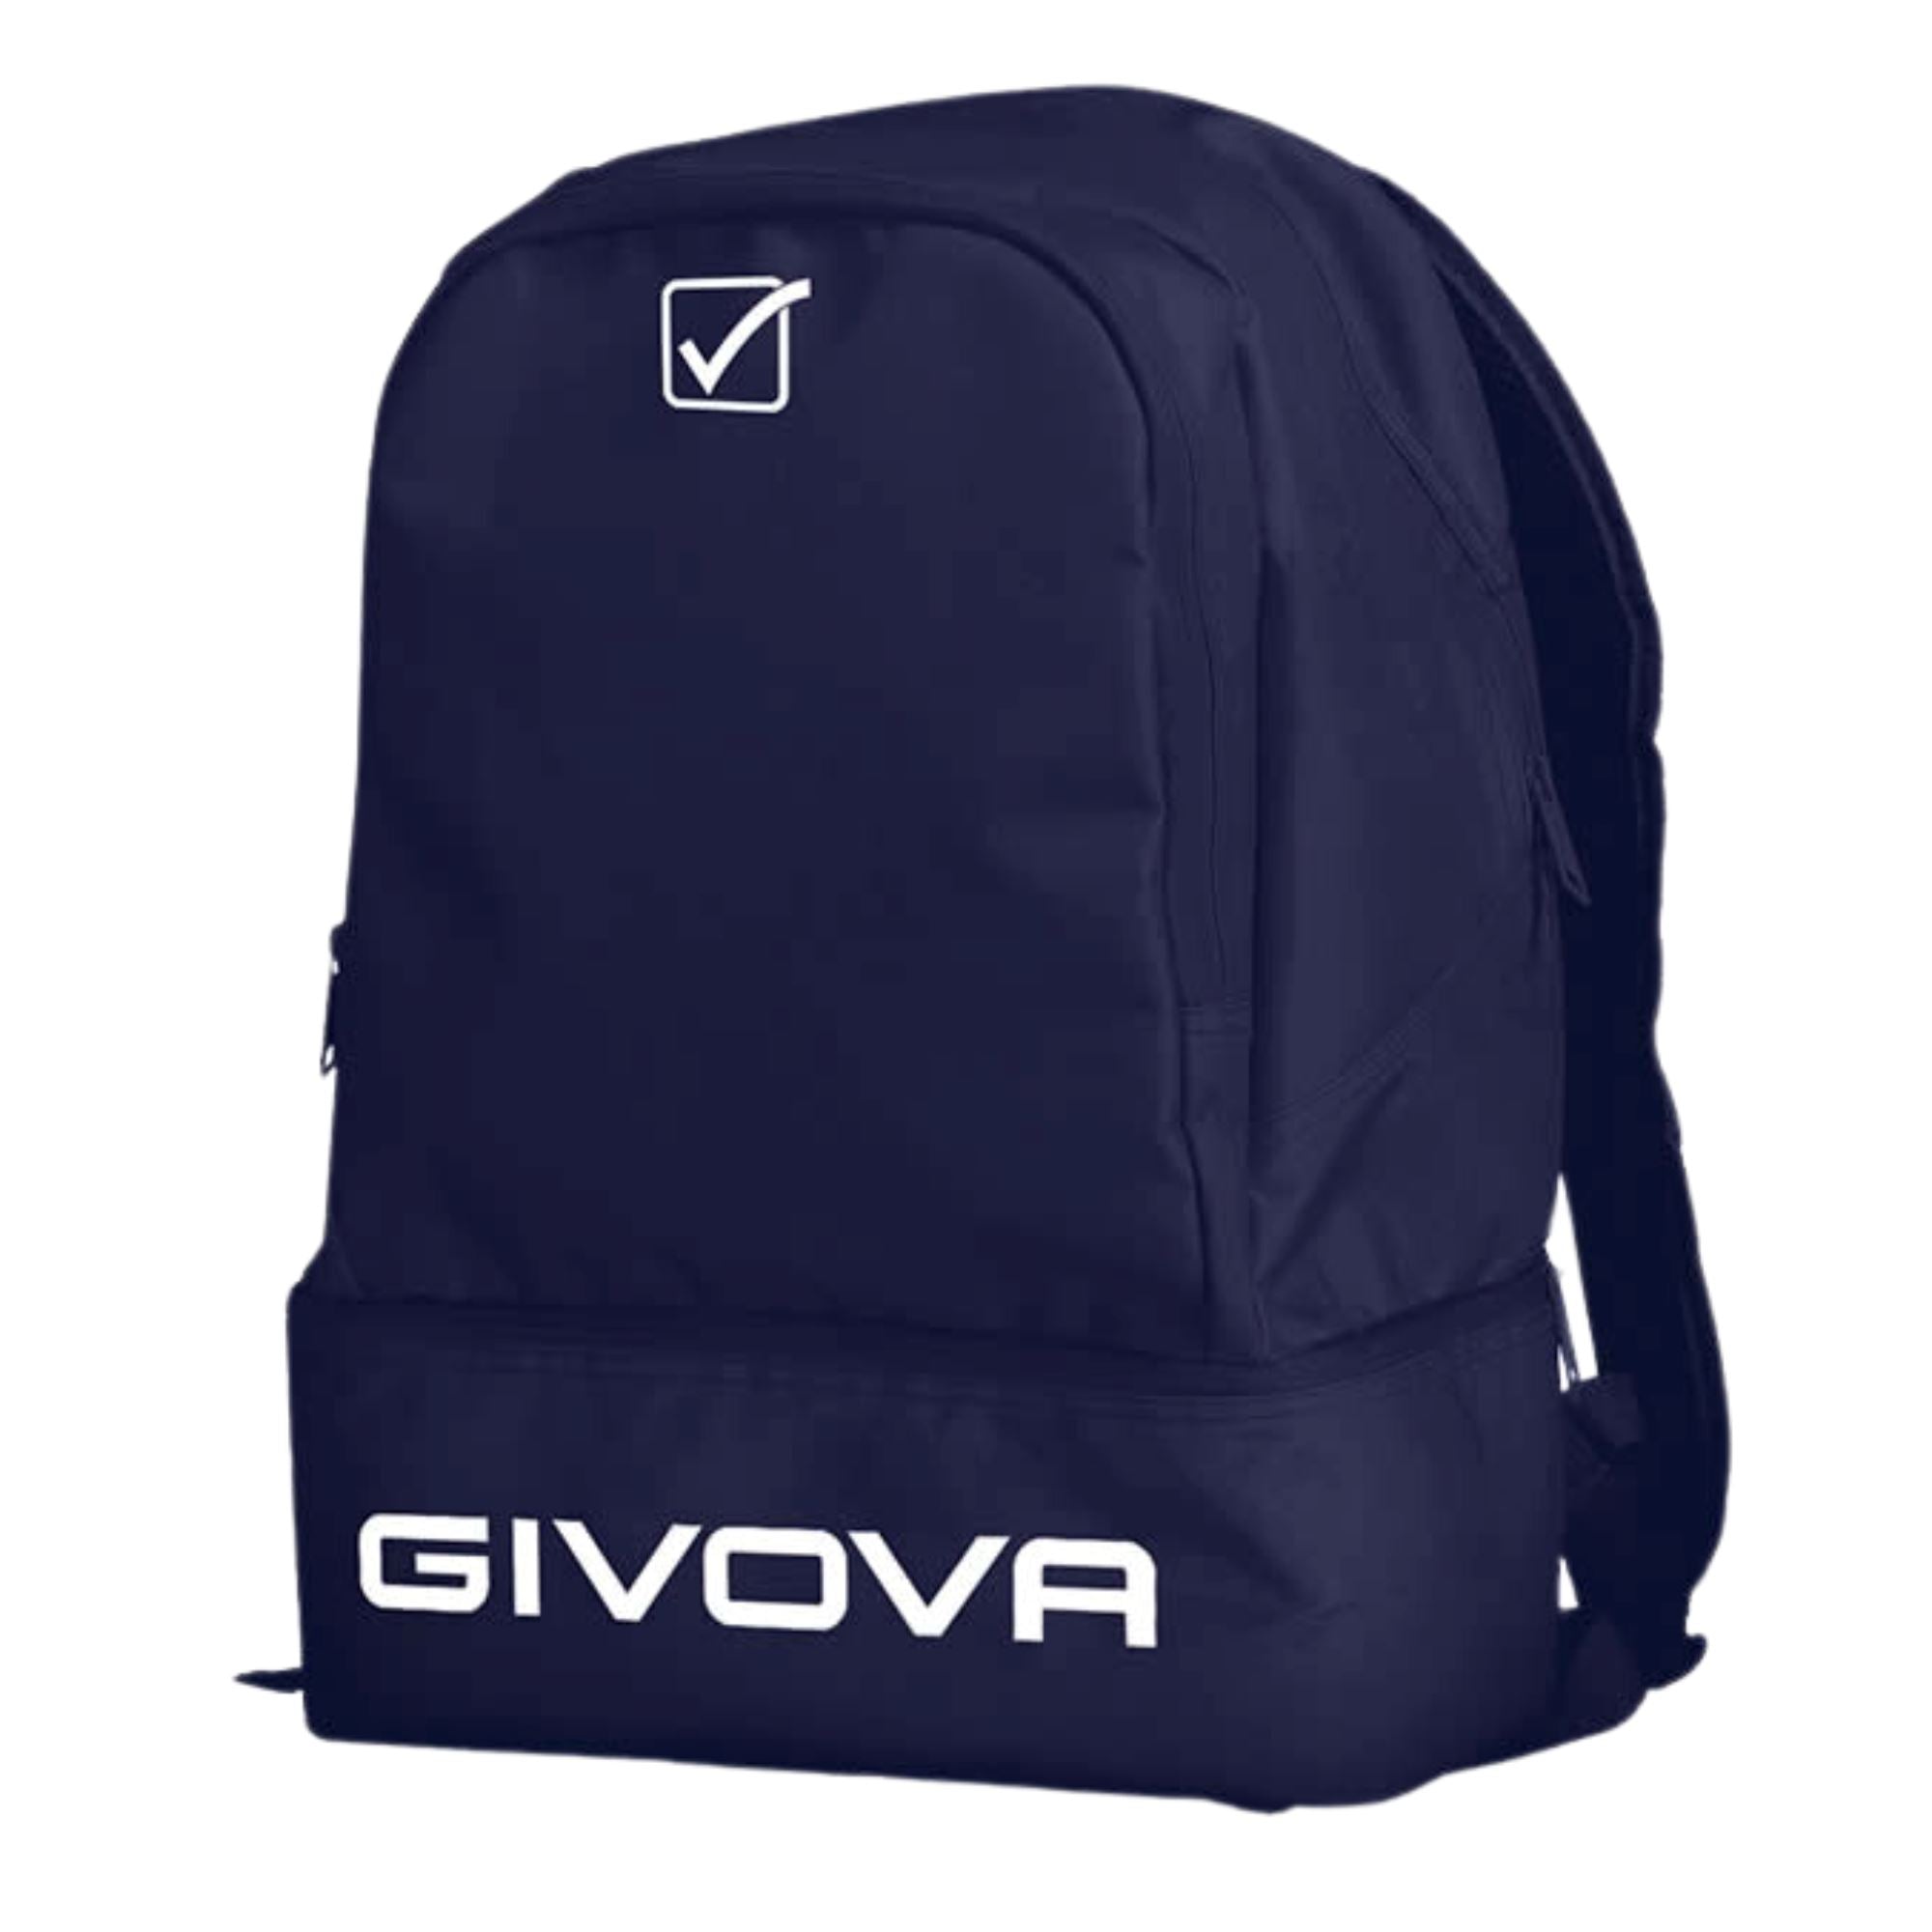 Givova Europa Backpack - GIVOVA